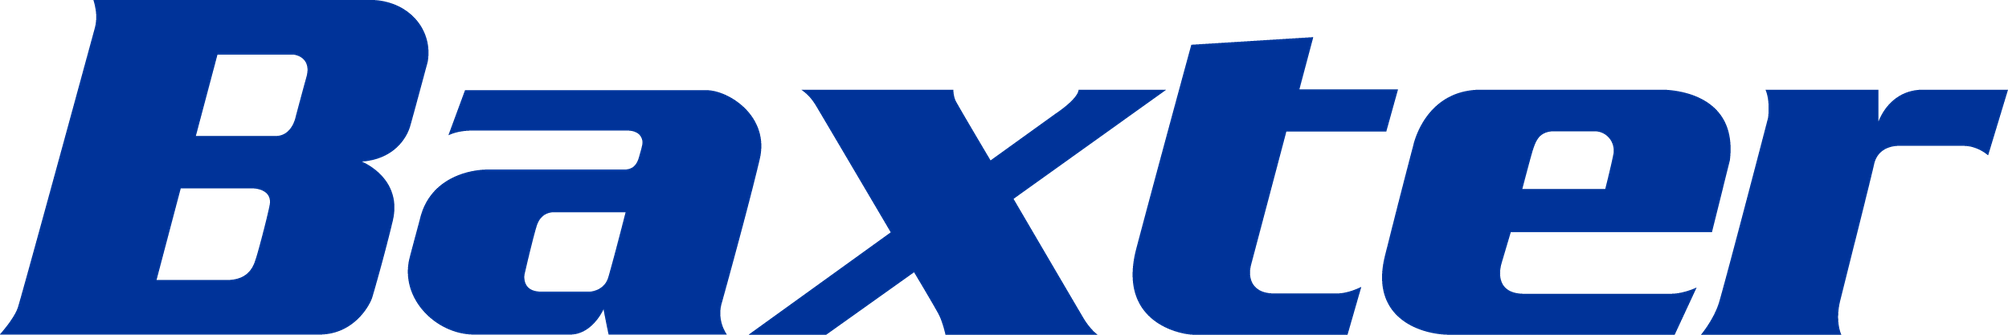 Baxter_logo